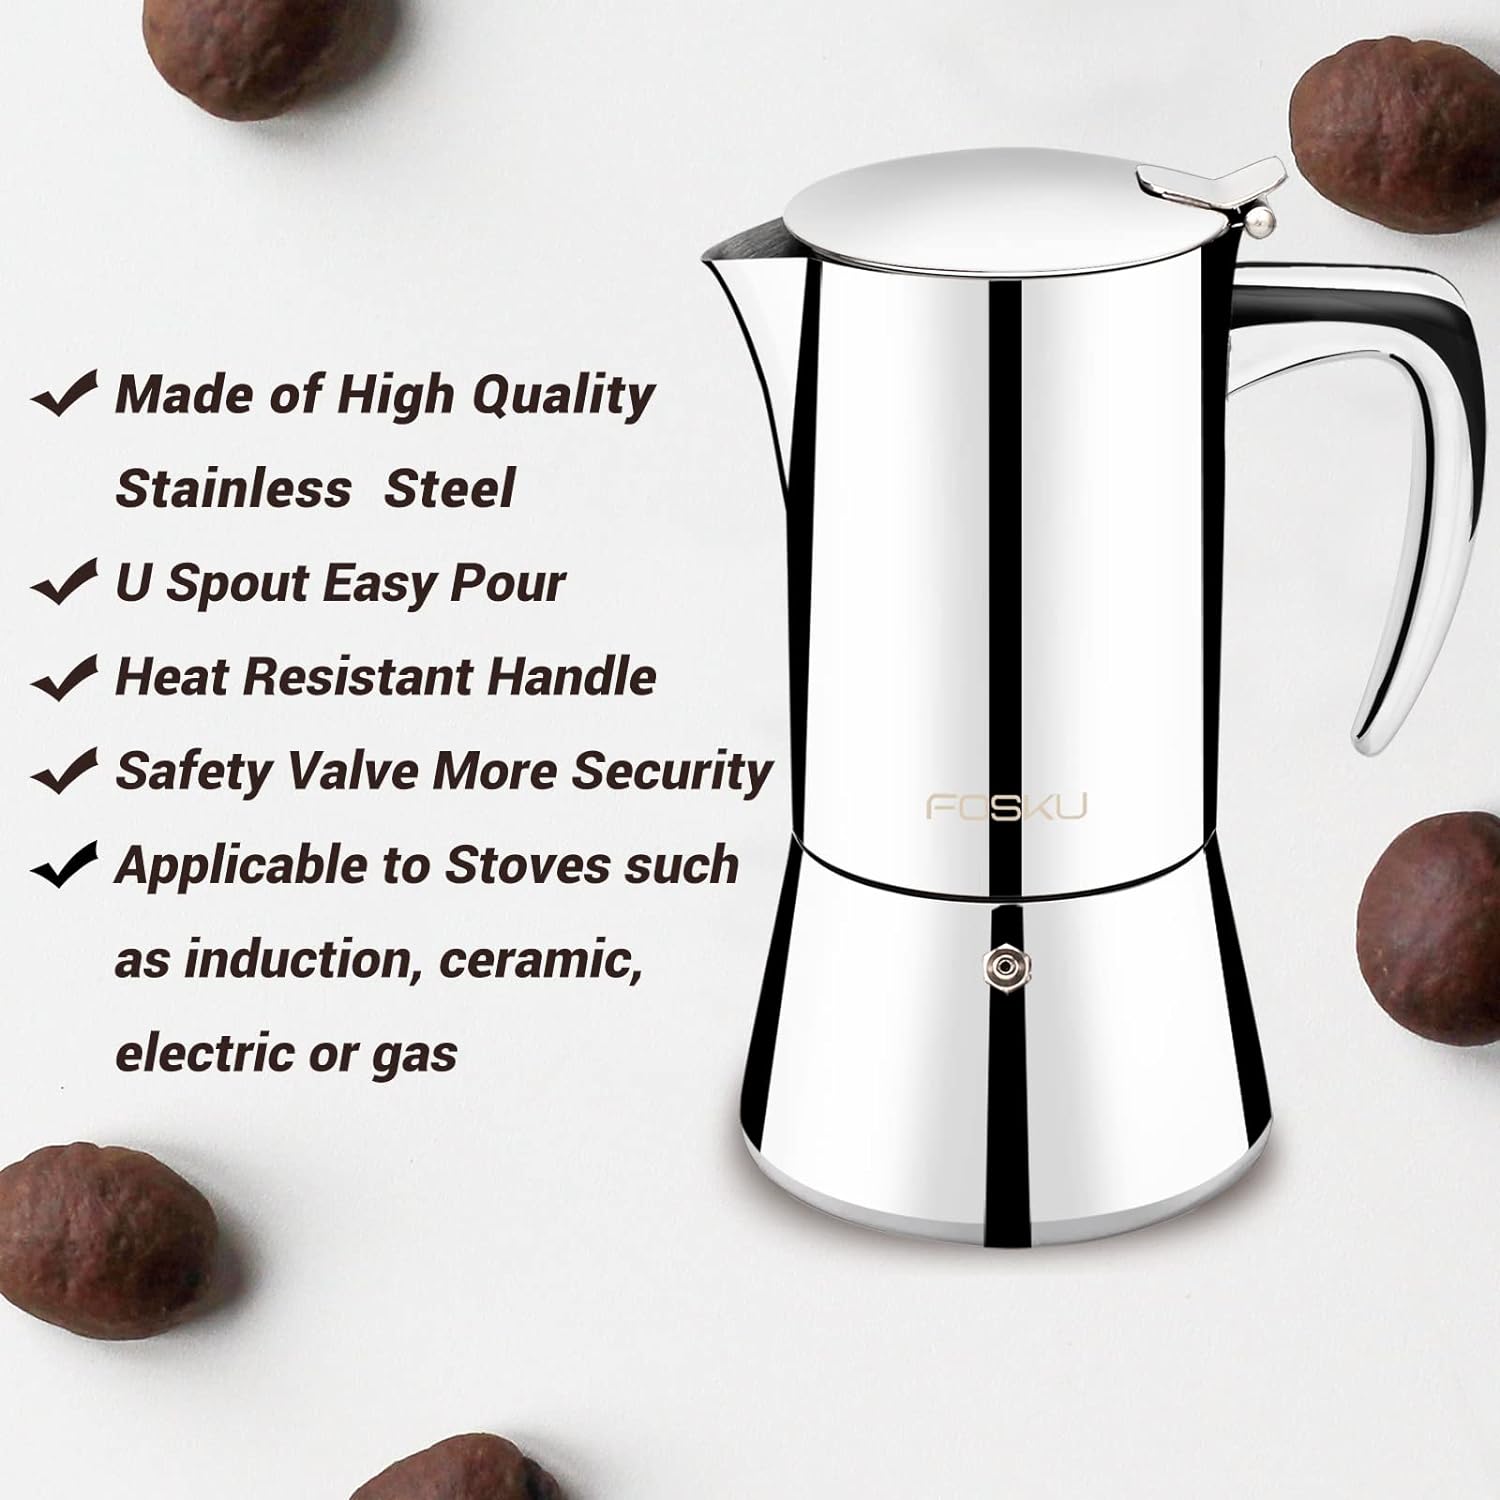 FOSKU Stovetop Espresso Maker, Stainless Steel Moka Pot, Italian Style Coffee Maker, Espresso Pot For 6 Cups, 300ml (Silver)